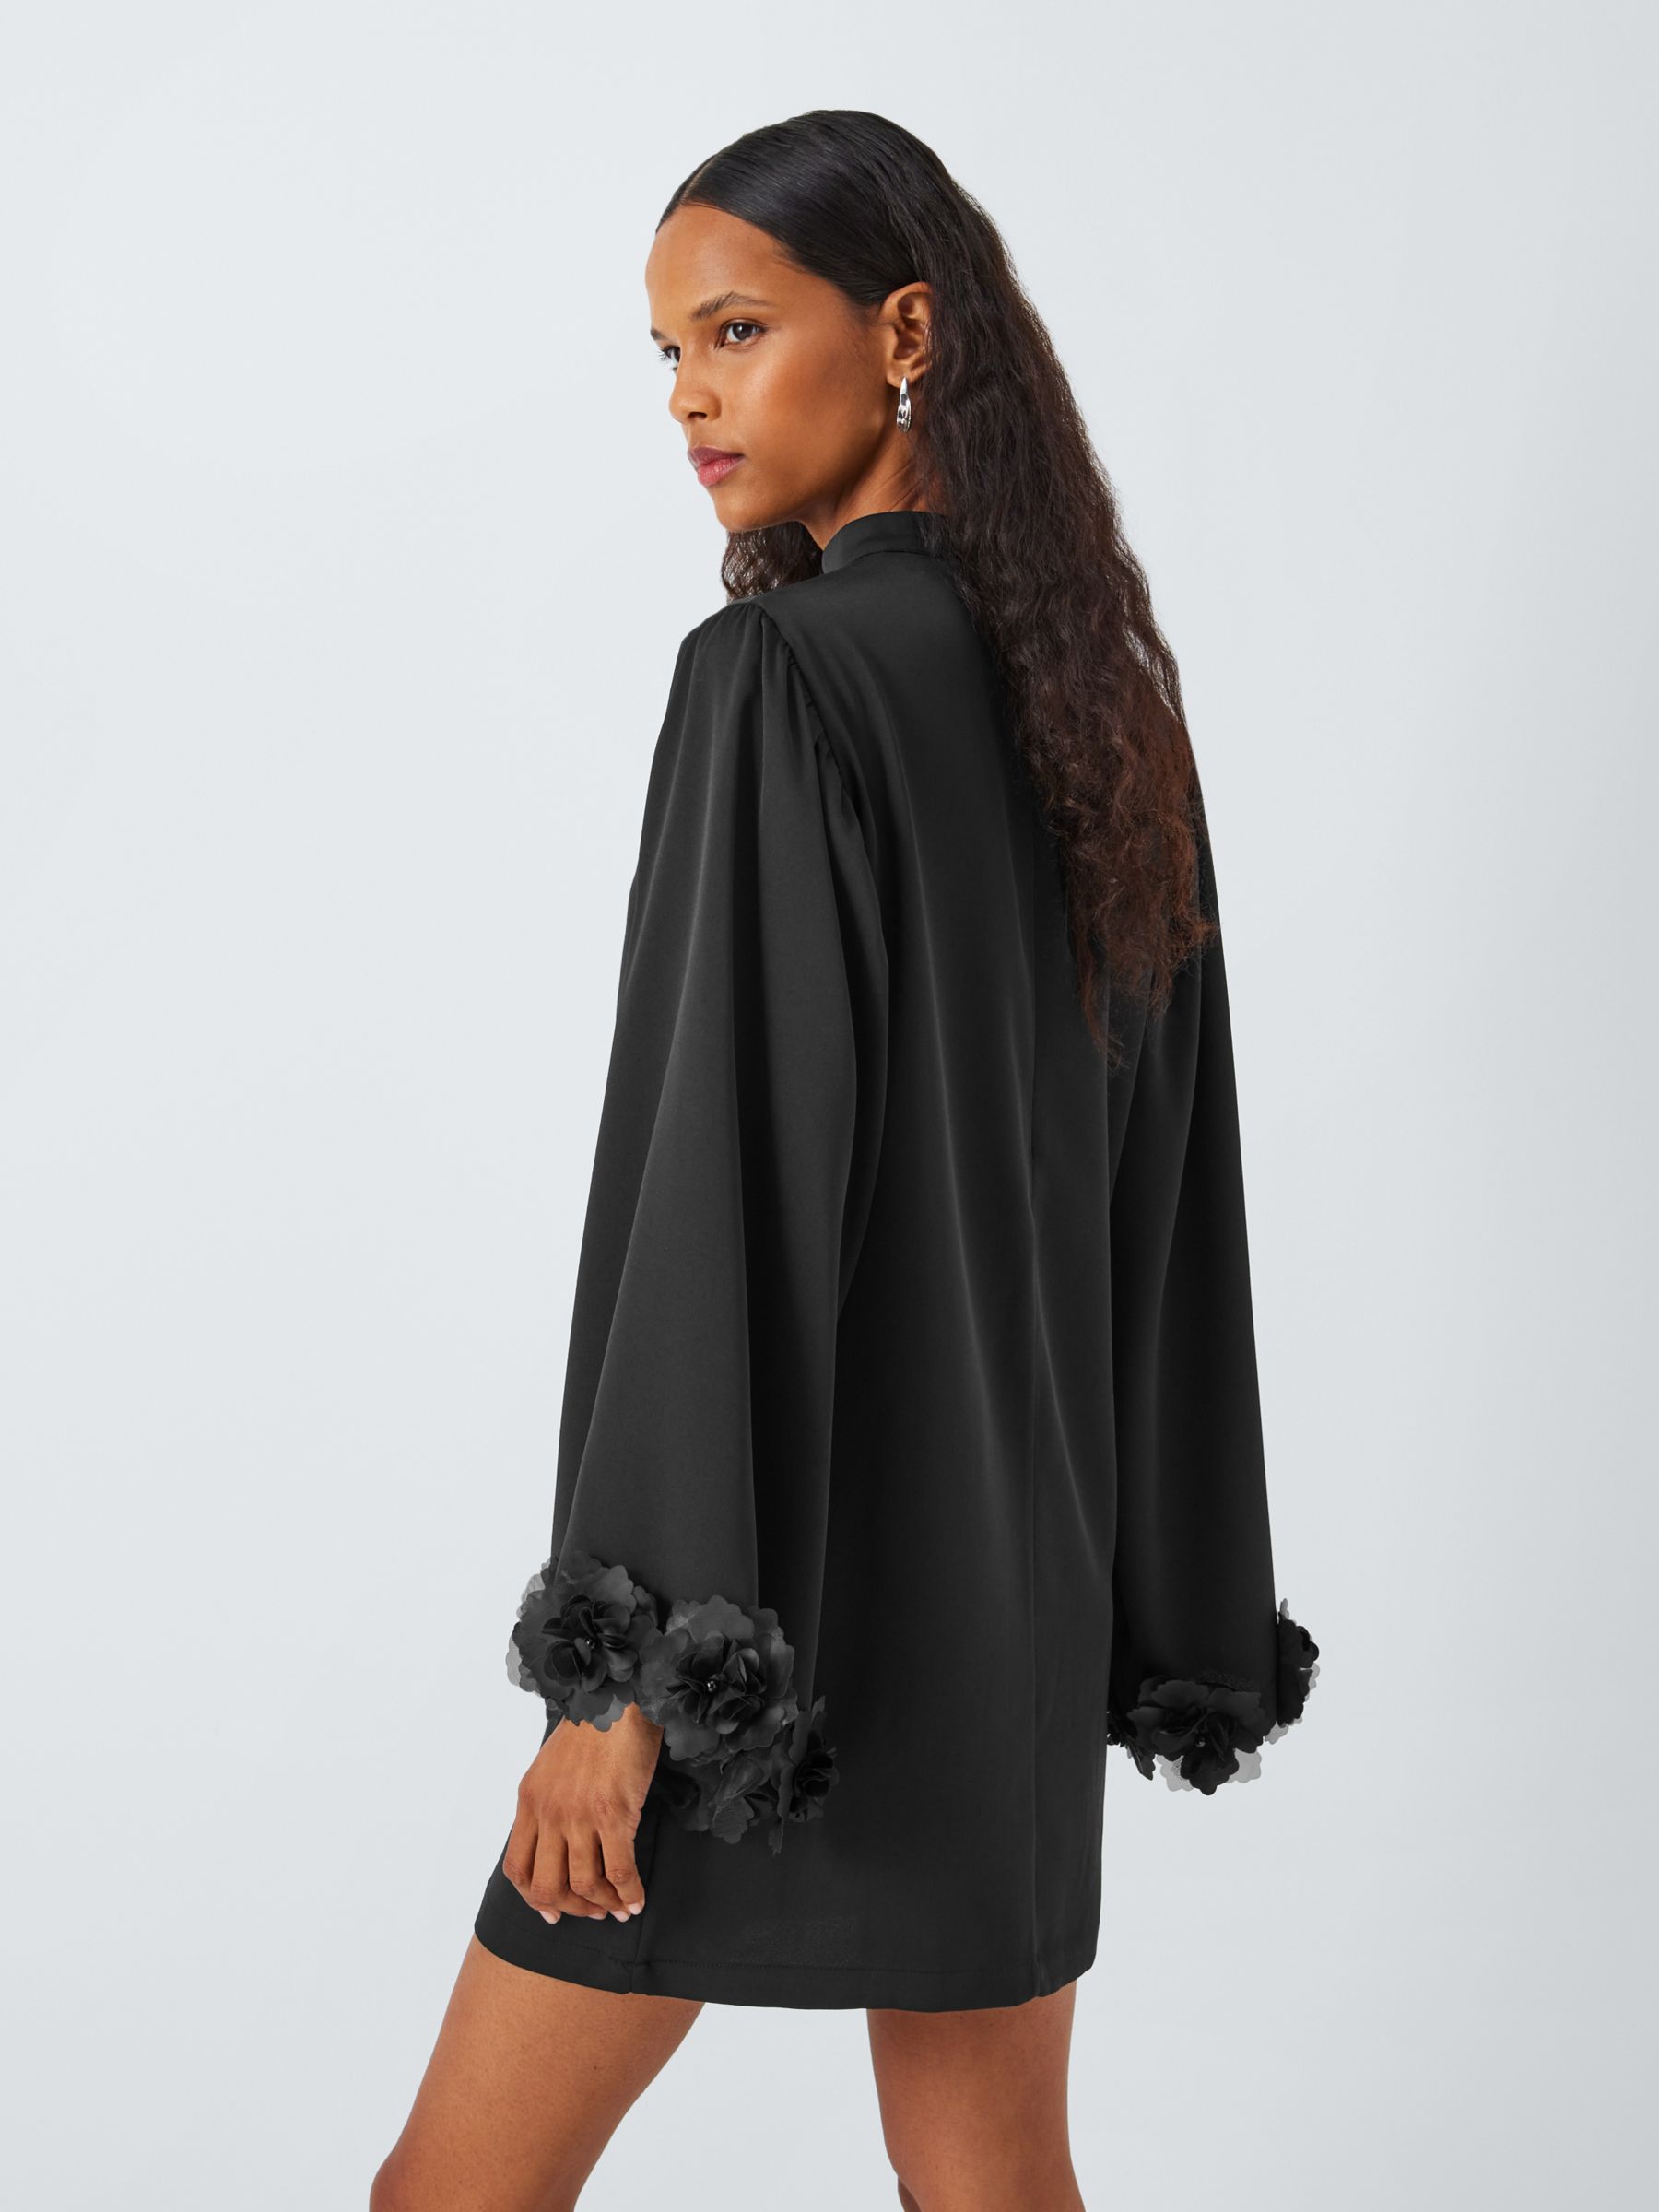 Sister Jane Dream Flower Trim Crepe Mini Dress, Black, 6